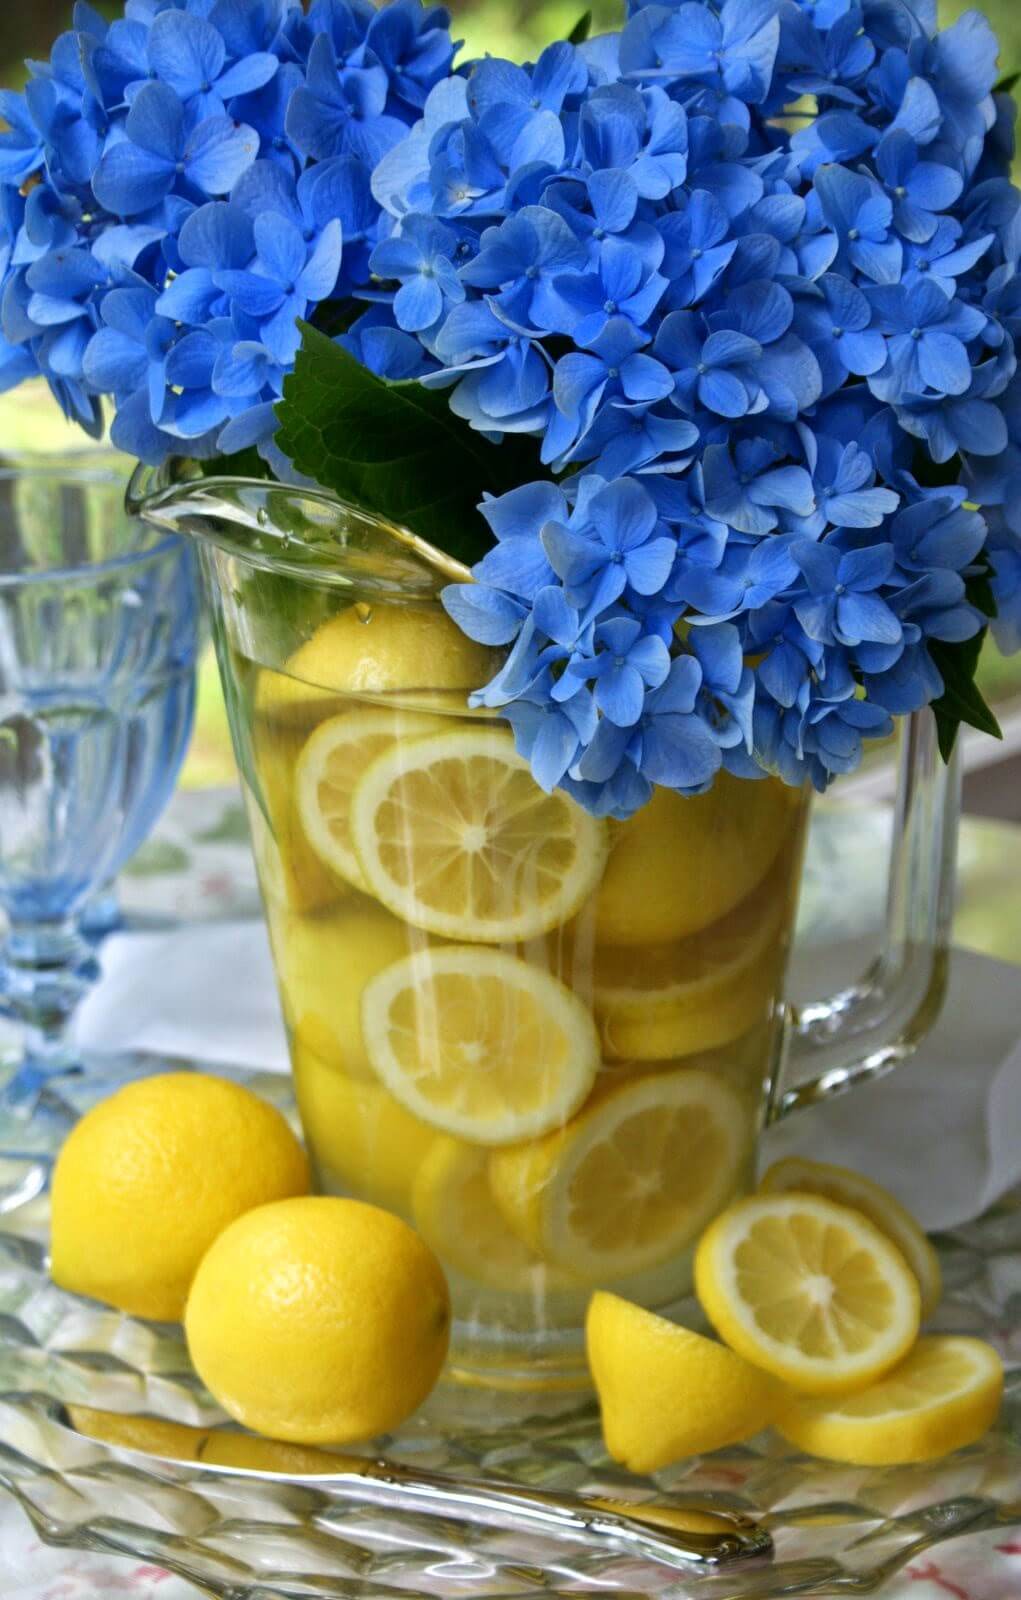 Bouquet Flower Arrangement with Sliced Lemon Vase